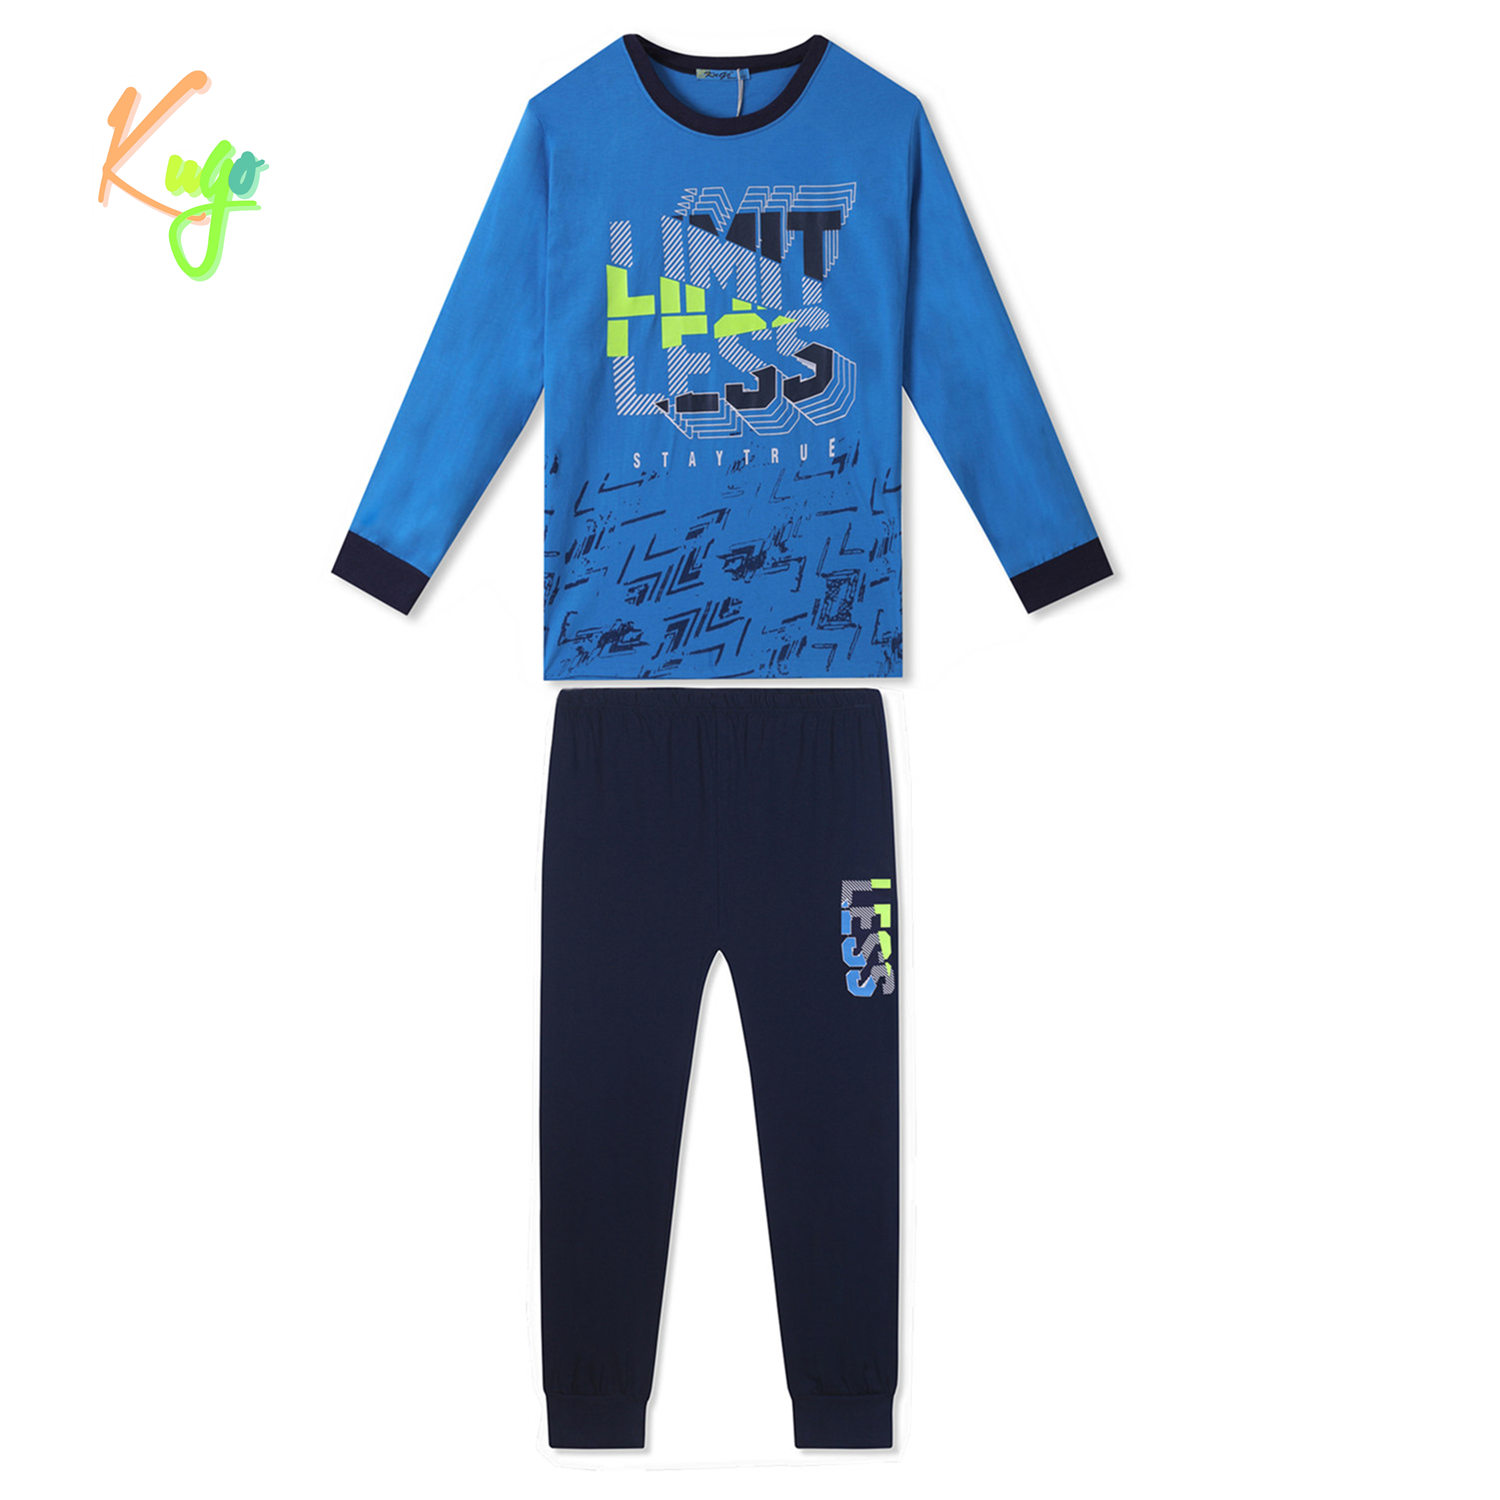 Chlapecké pyžamo - KUGO MP3783, modrá Barva: Modrá, Velikost: 146